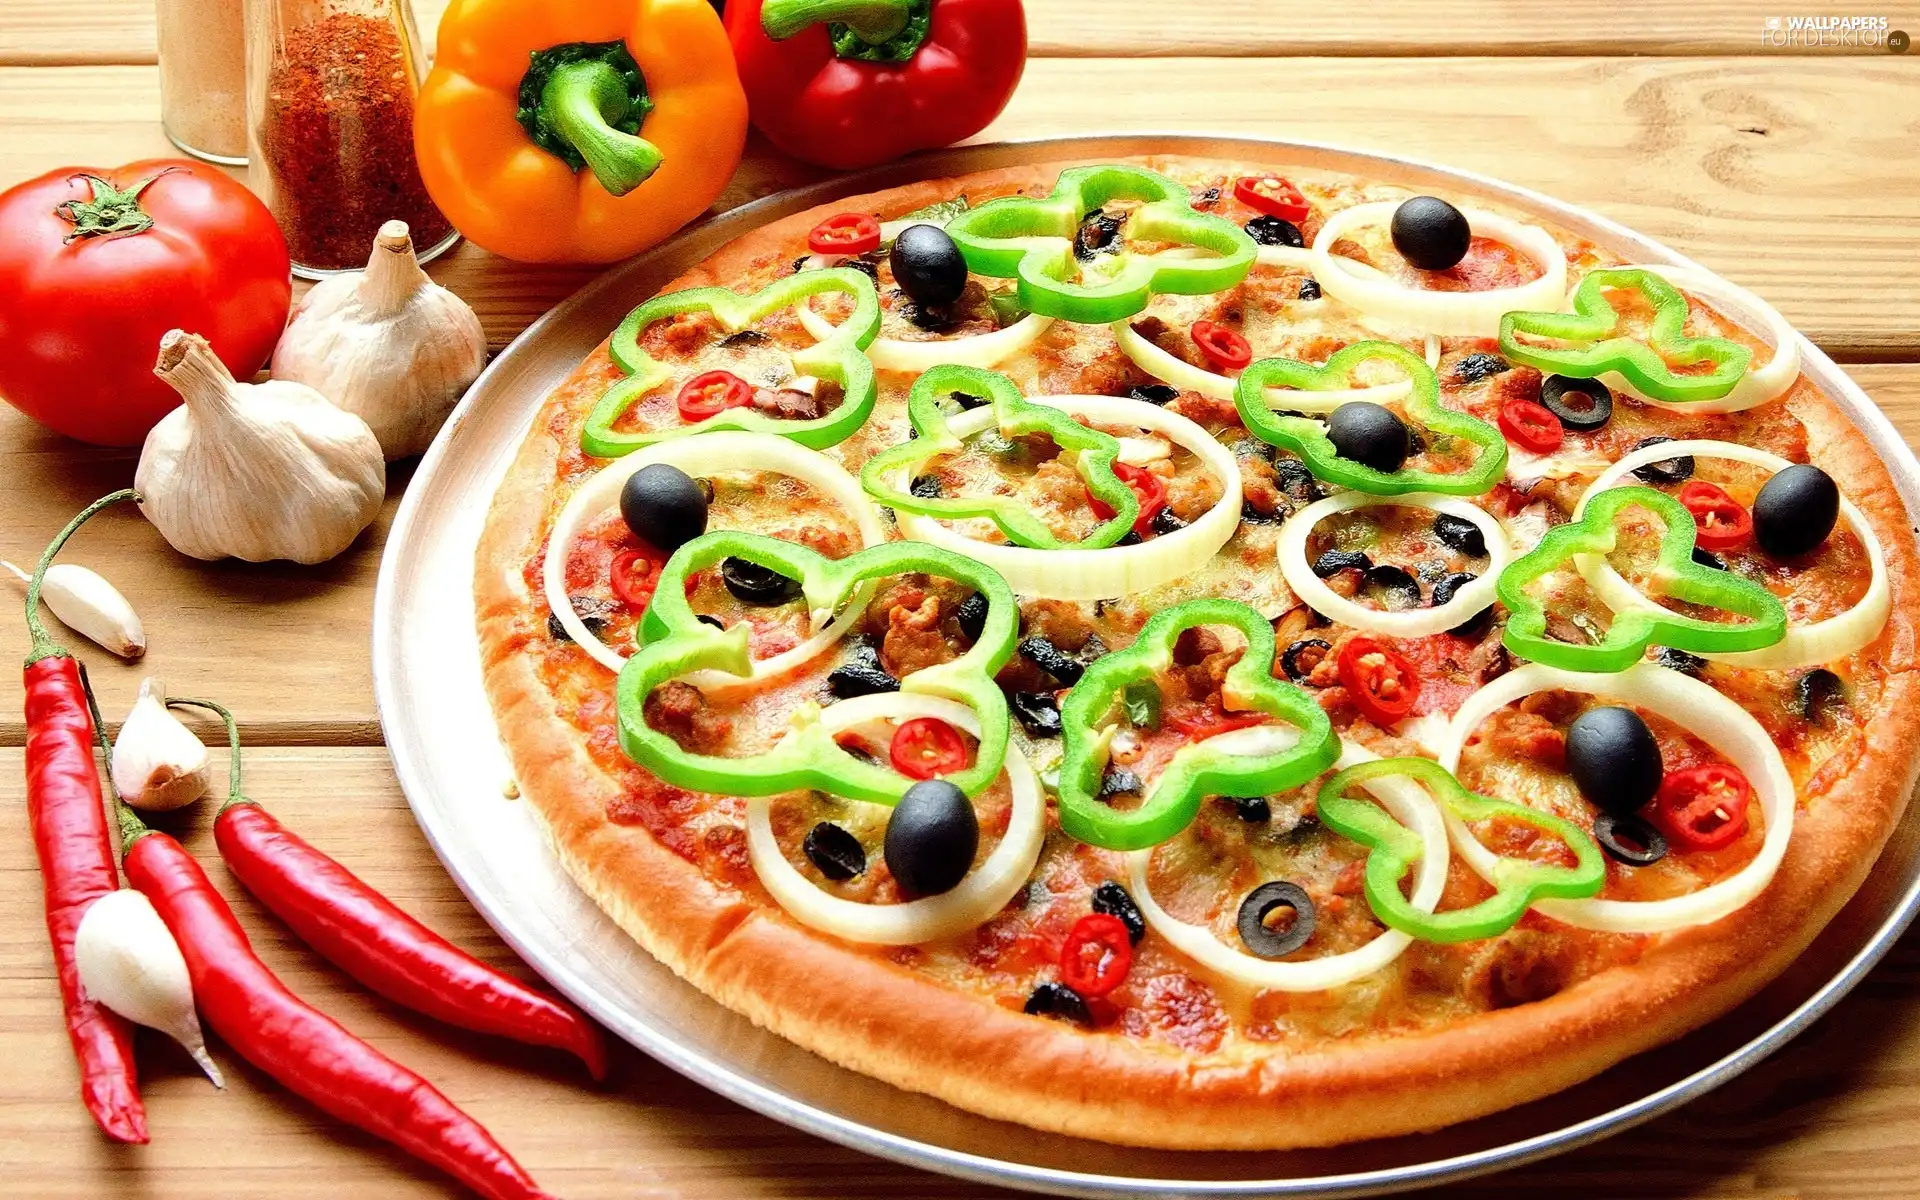 pizza, pepper, garlic, vegetables